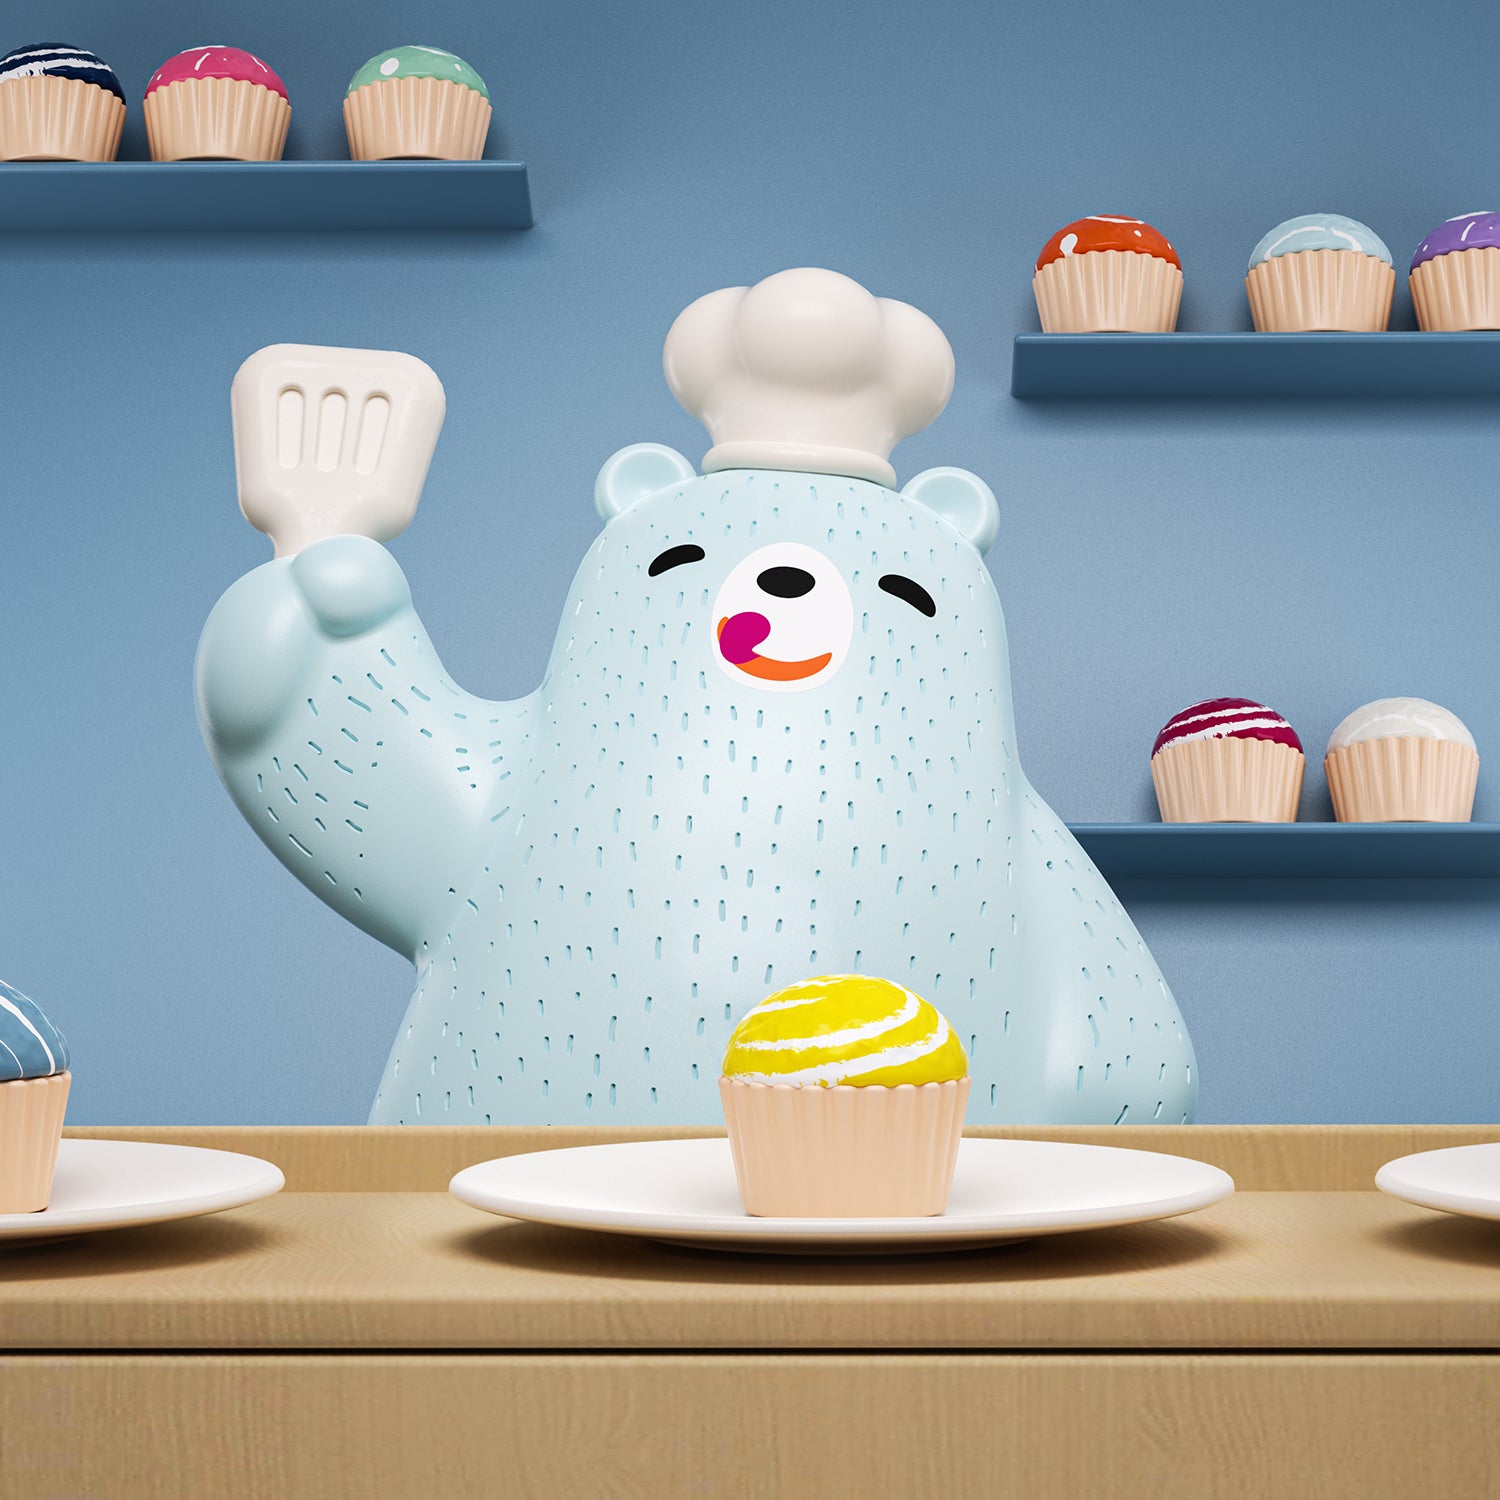 Topbright Toys Yummy Chef Bear Cupcake Math and Logic Bakery Shop Balance  Scale, 1 Piece - Ralphs